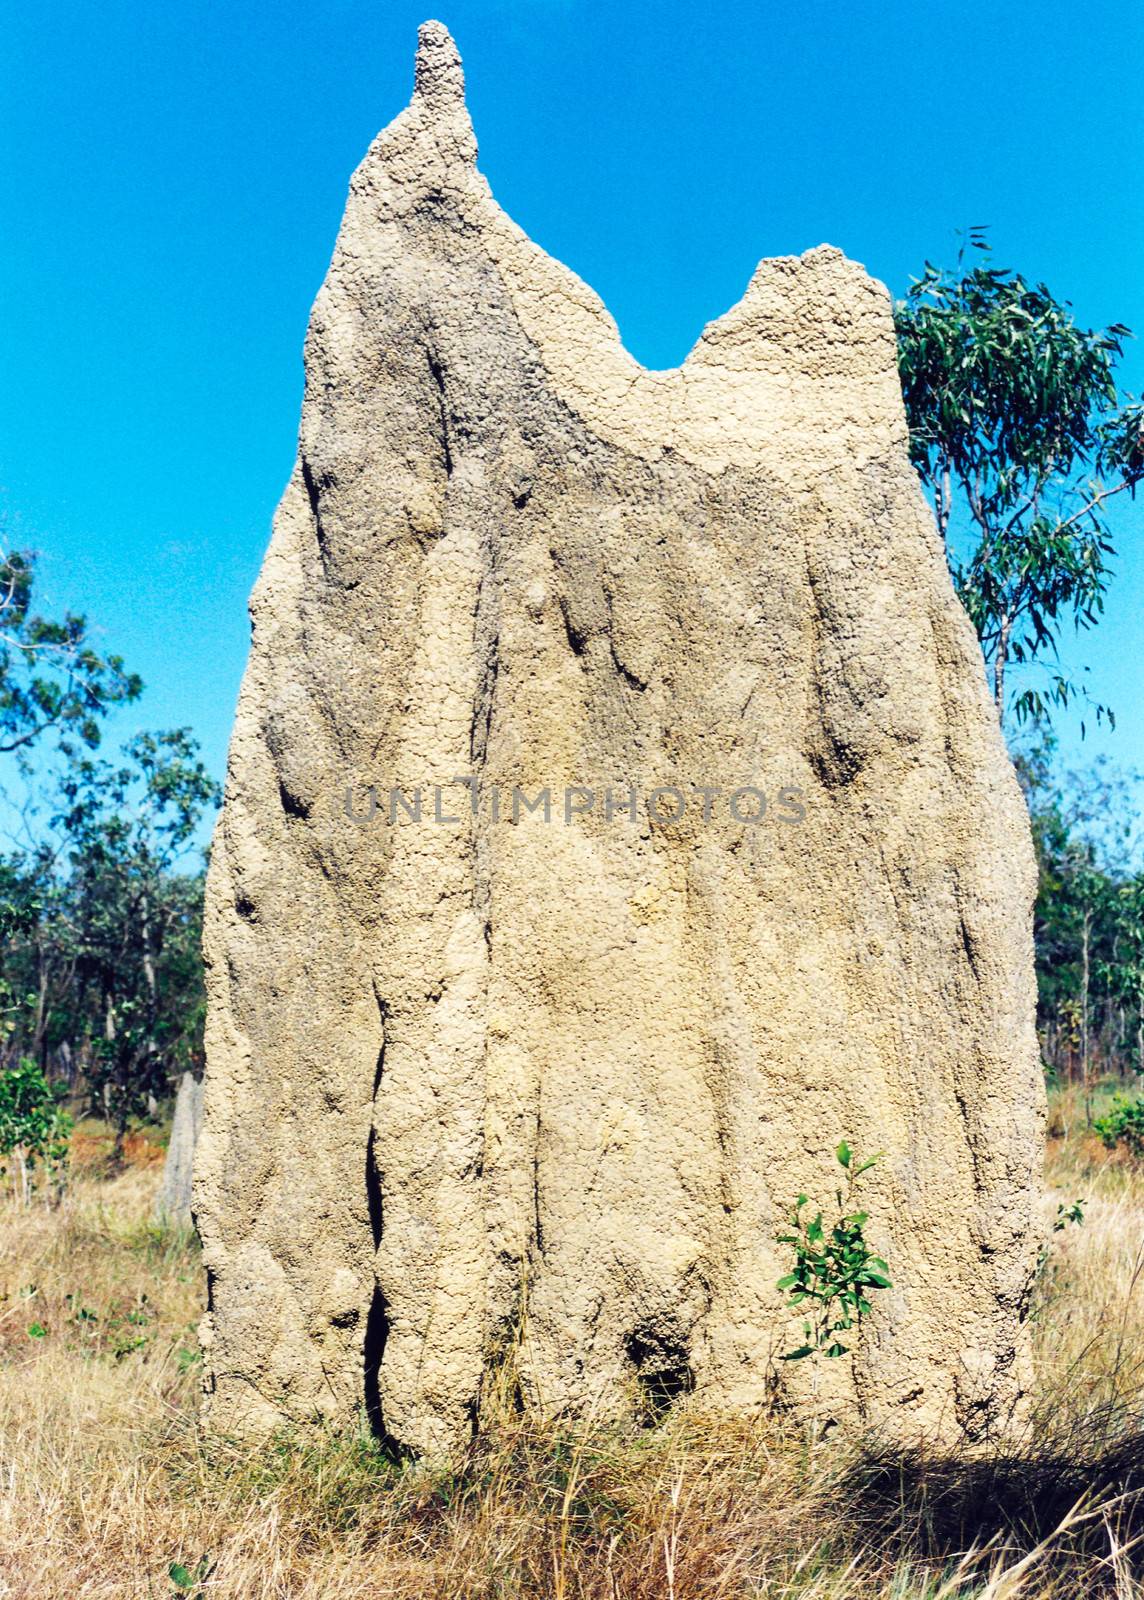 termit mound by iacobino